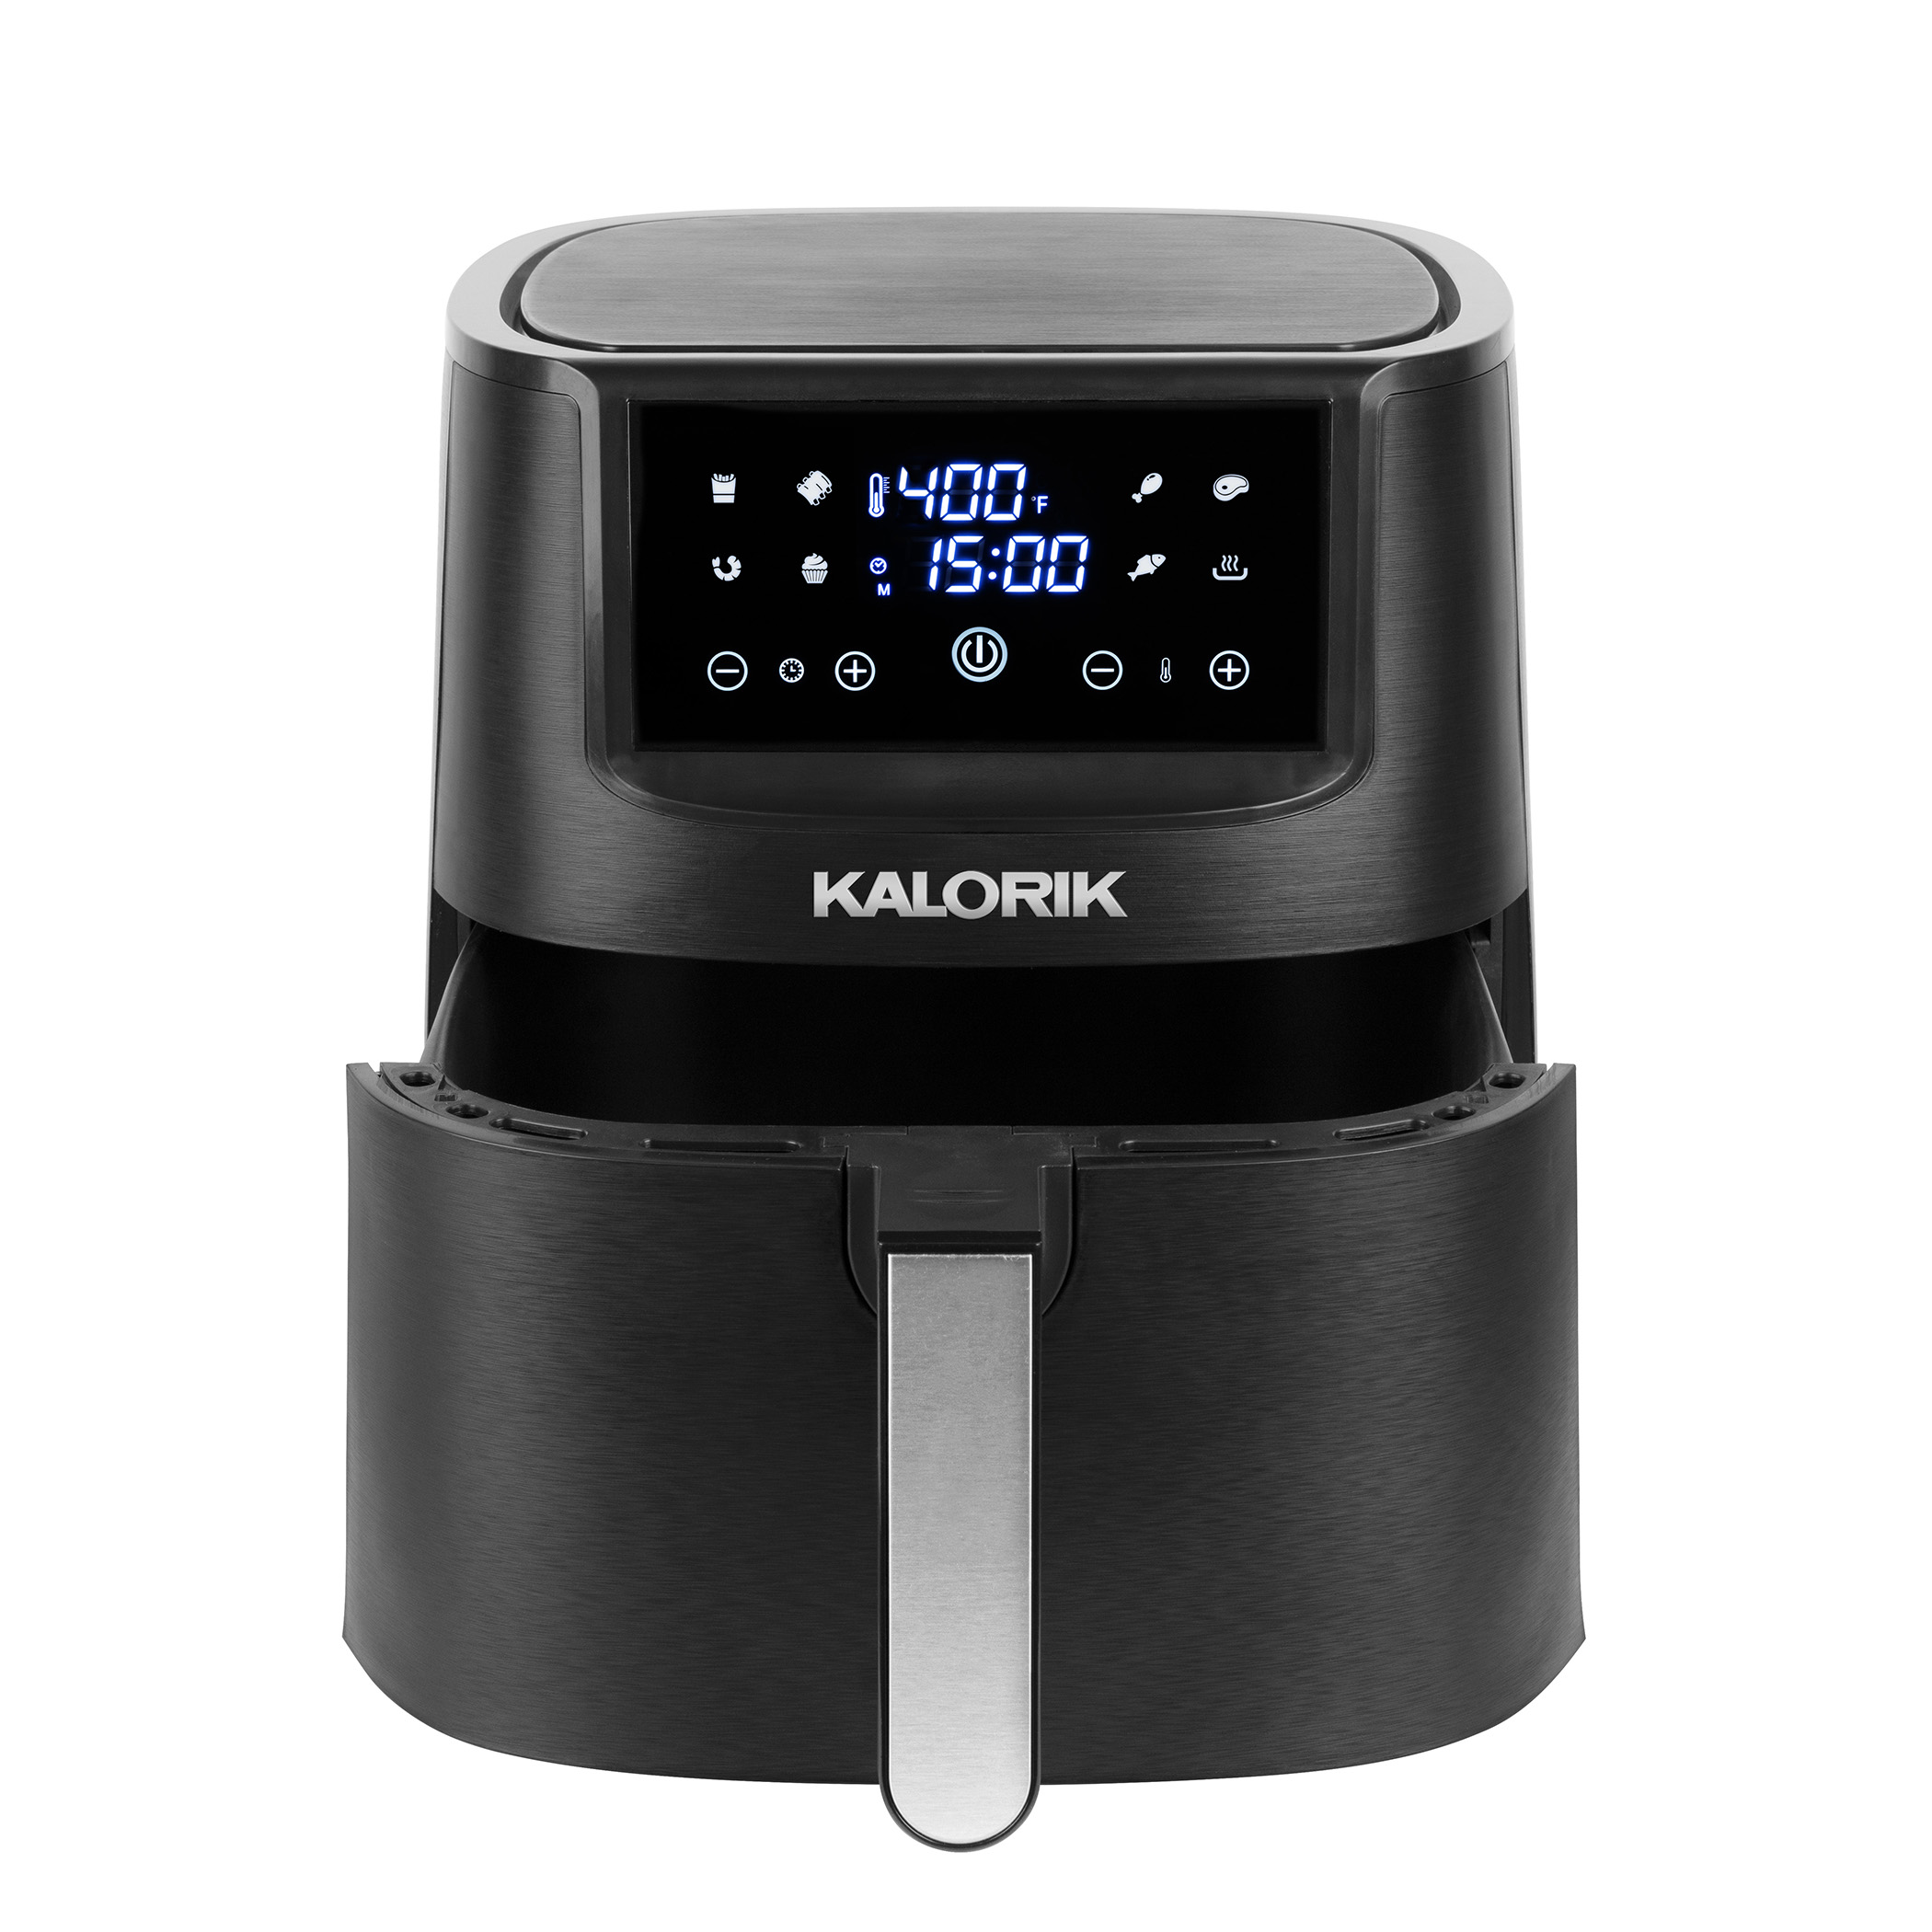 Kalorik® 8 Qt Digital Touchscreen Air Fryer with Trivet, Black FT 51503 BK - image 4 of 10